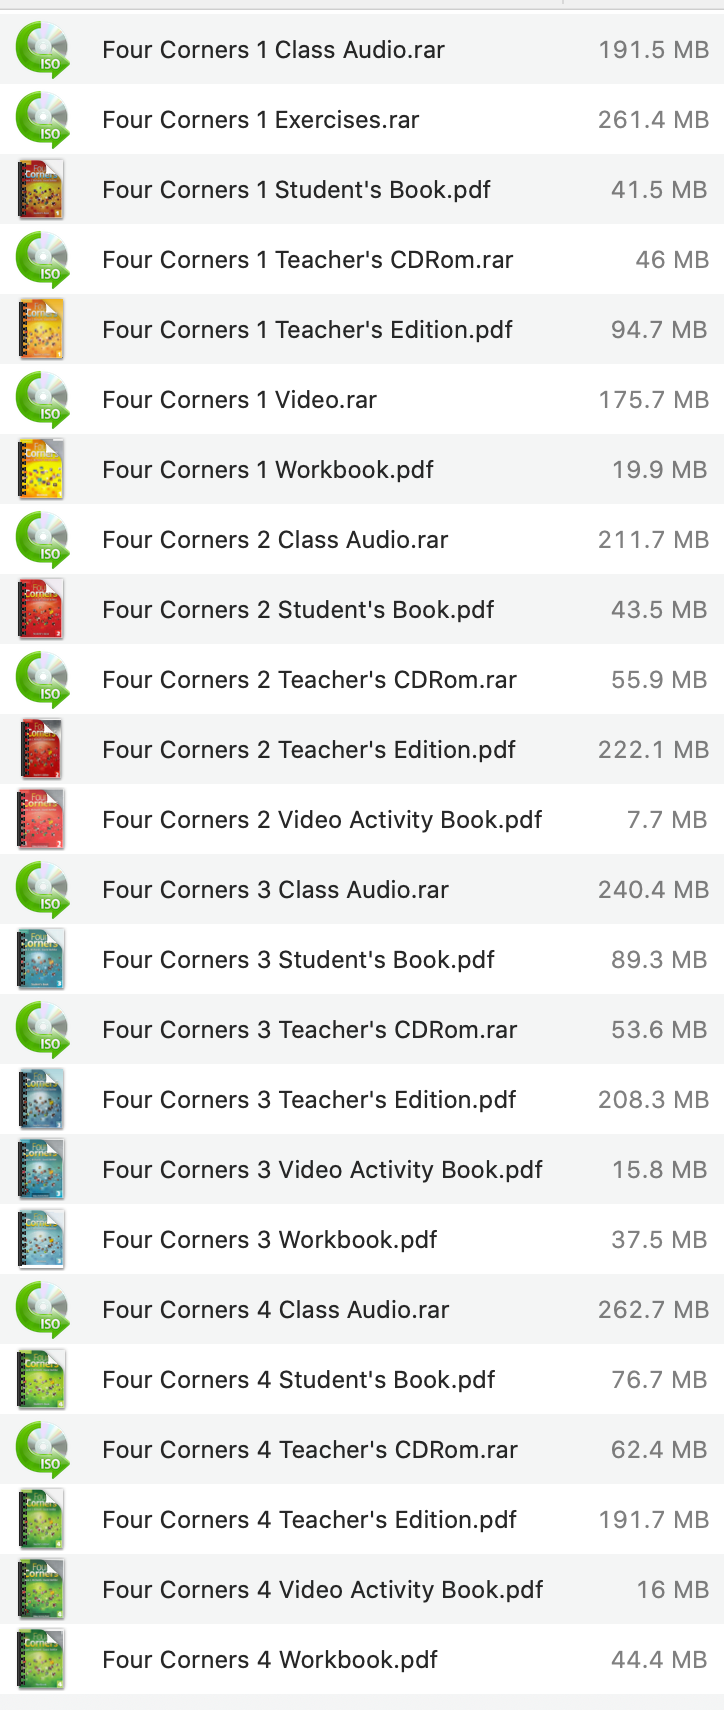 Download Ebook Cambridge Four Corners Level 1234 Pdf Audio Video full